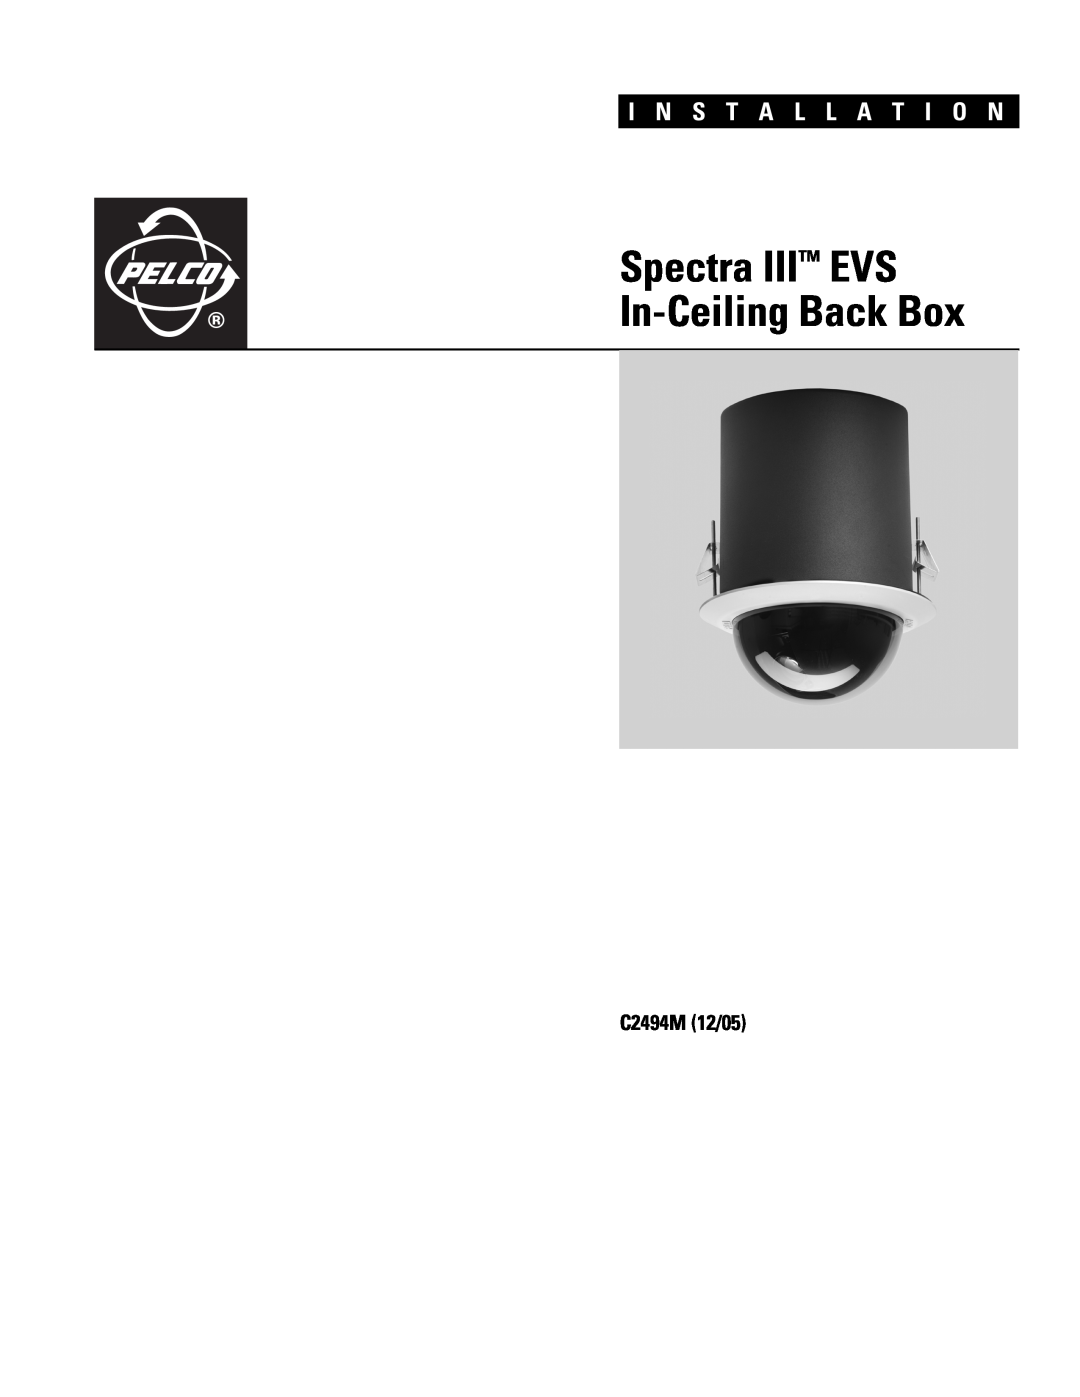 Pelco manual Spectra III EVS In-CeilingBack Box, I N S T A L L A T I O N, C2494M 12/05 